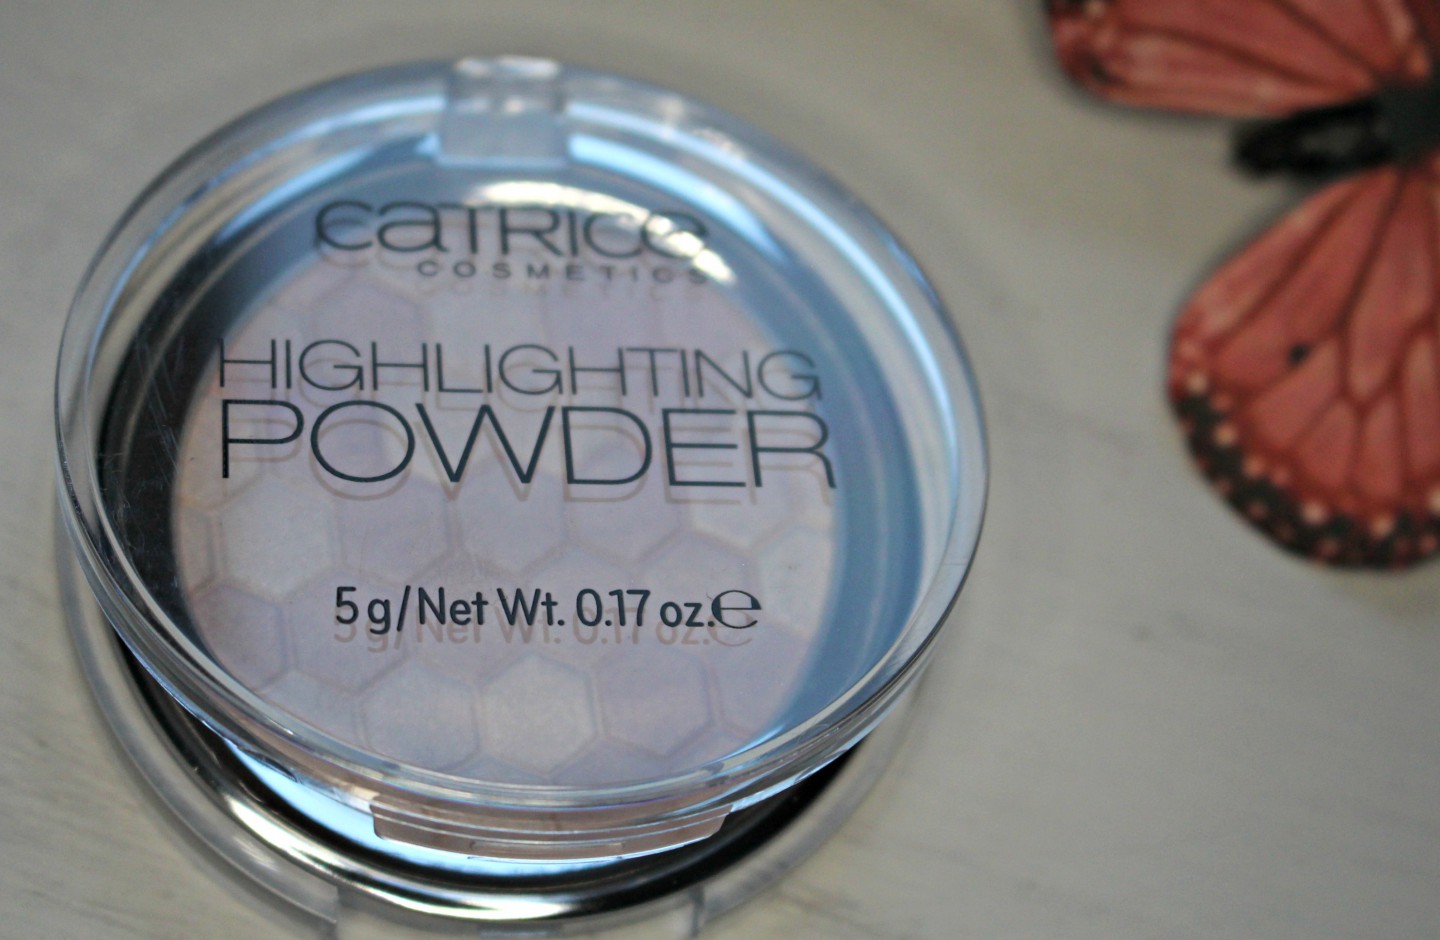 Catrice_Highlighting Powder